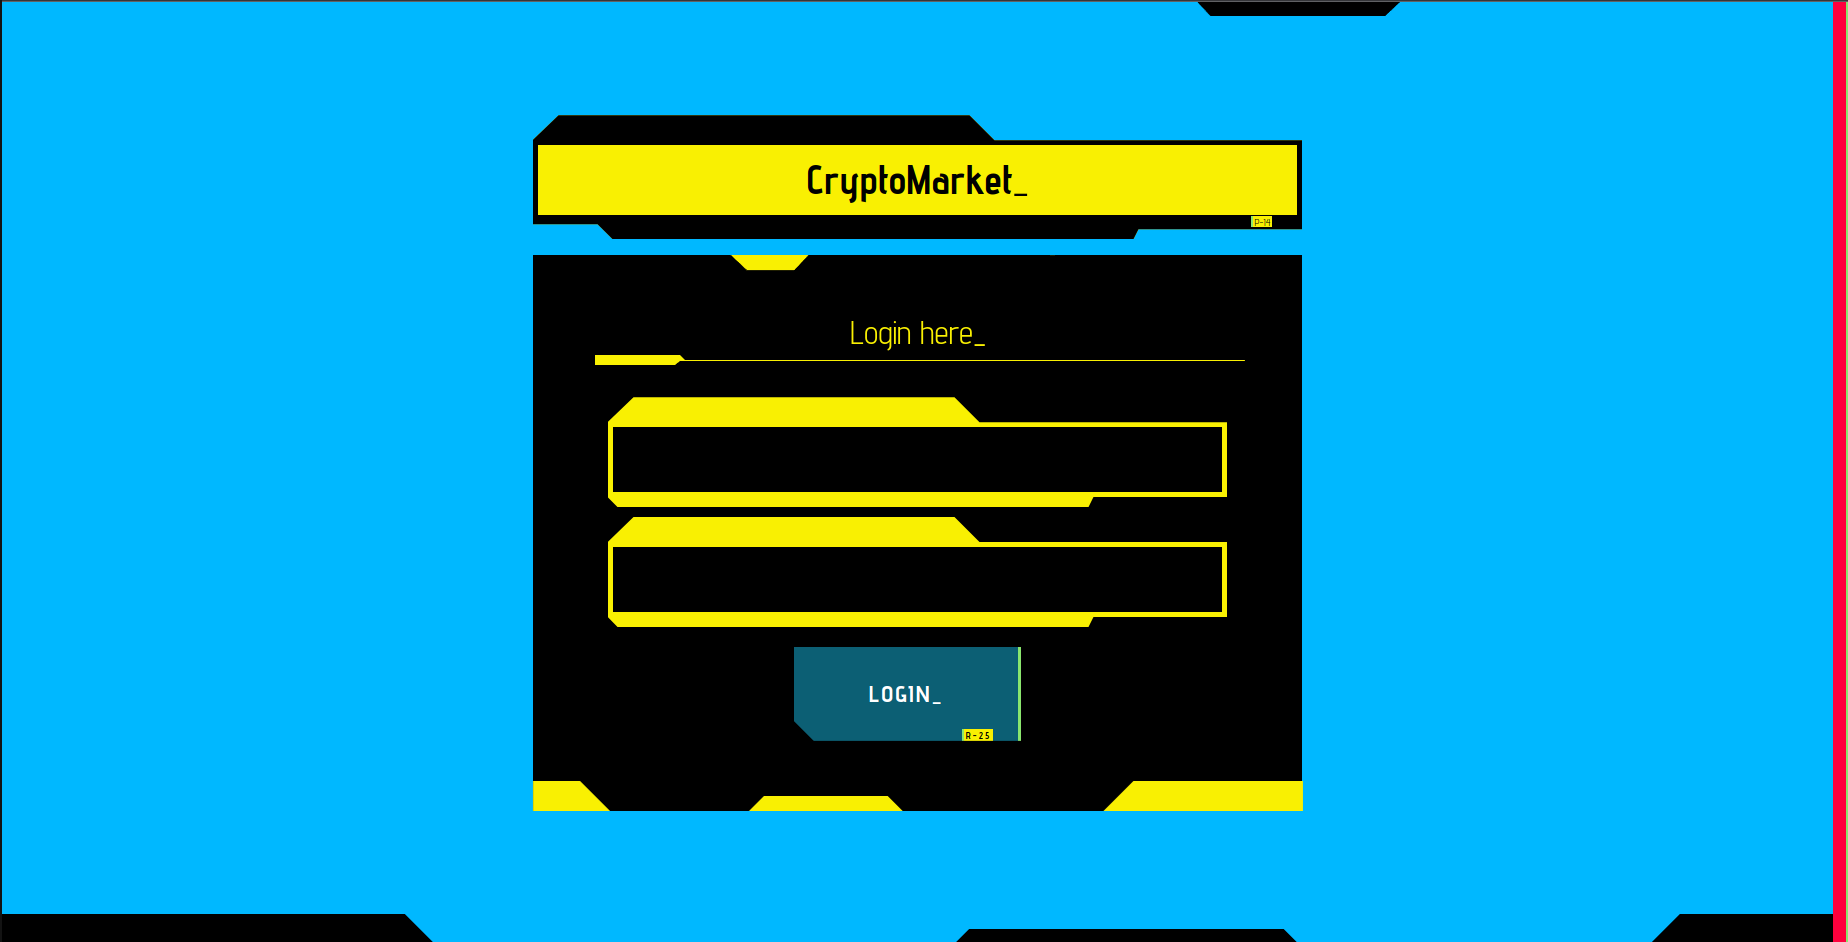 CryptoMarket main page